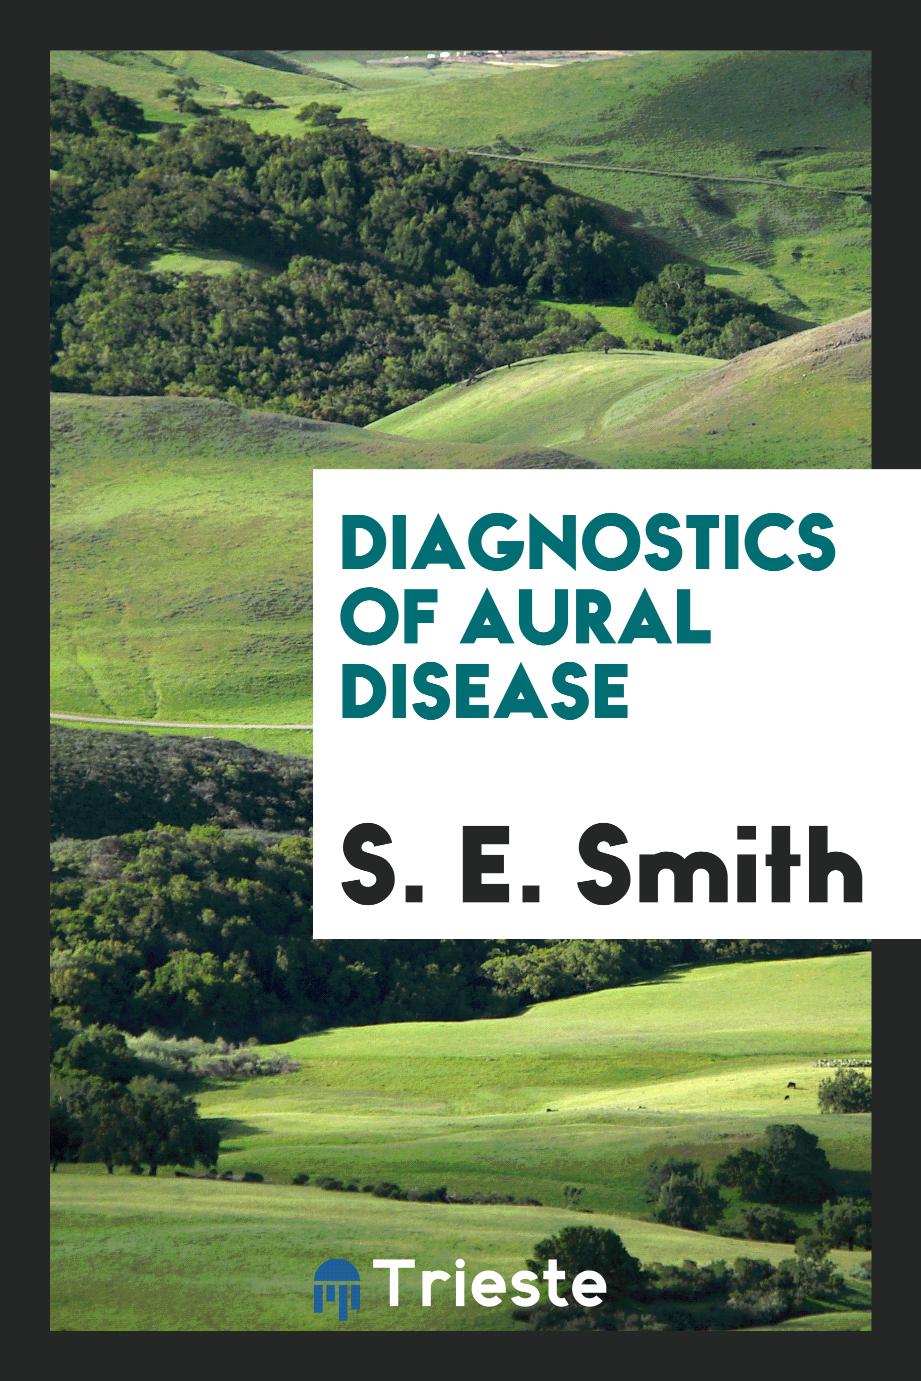 S. E. Smith - Diagnostics of Aural Disease